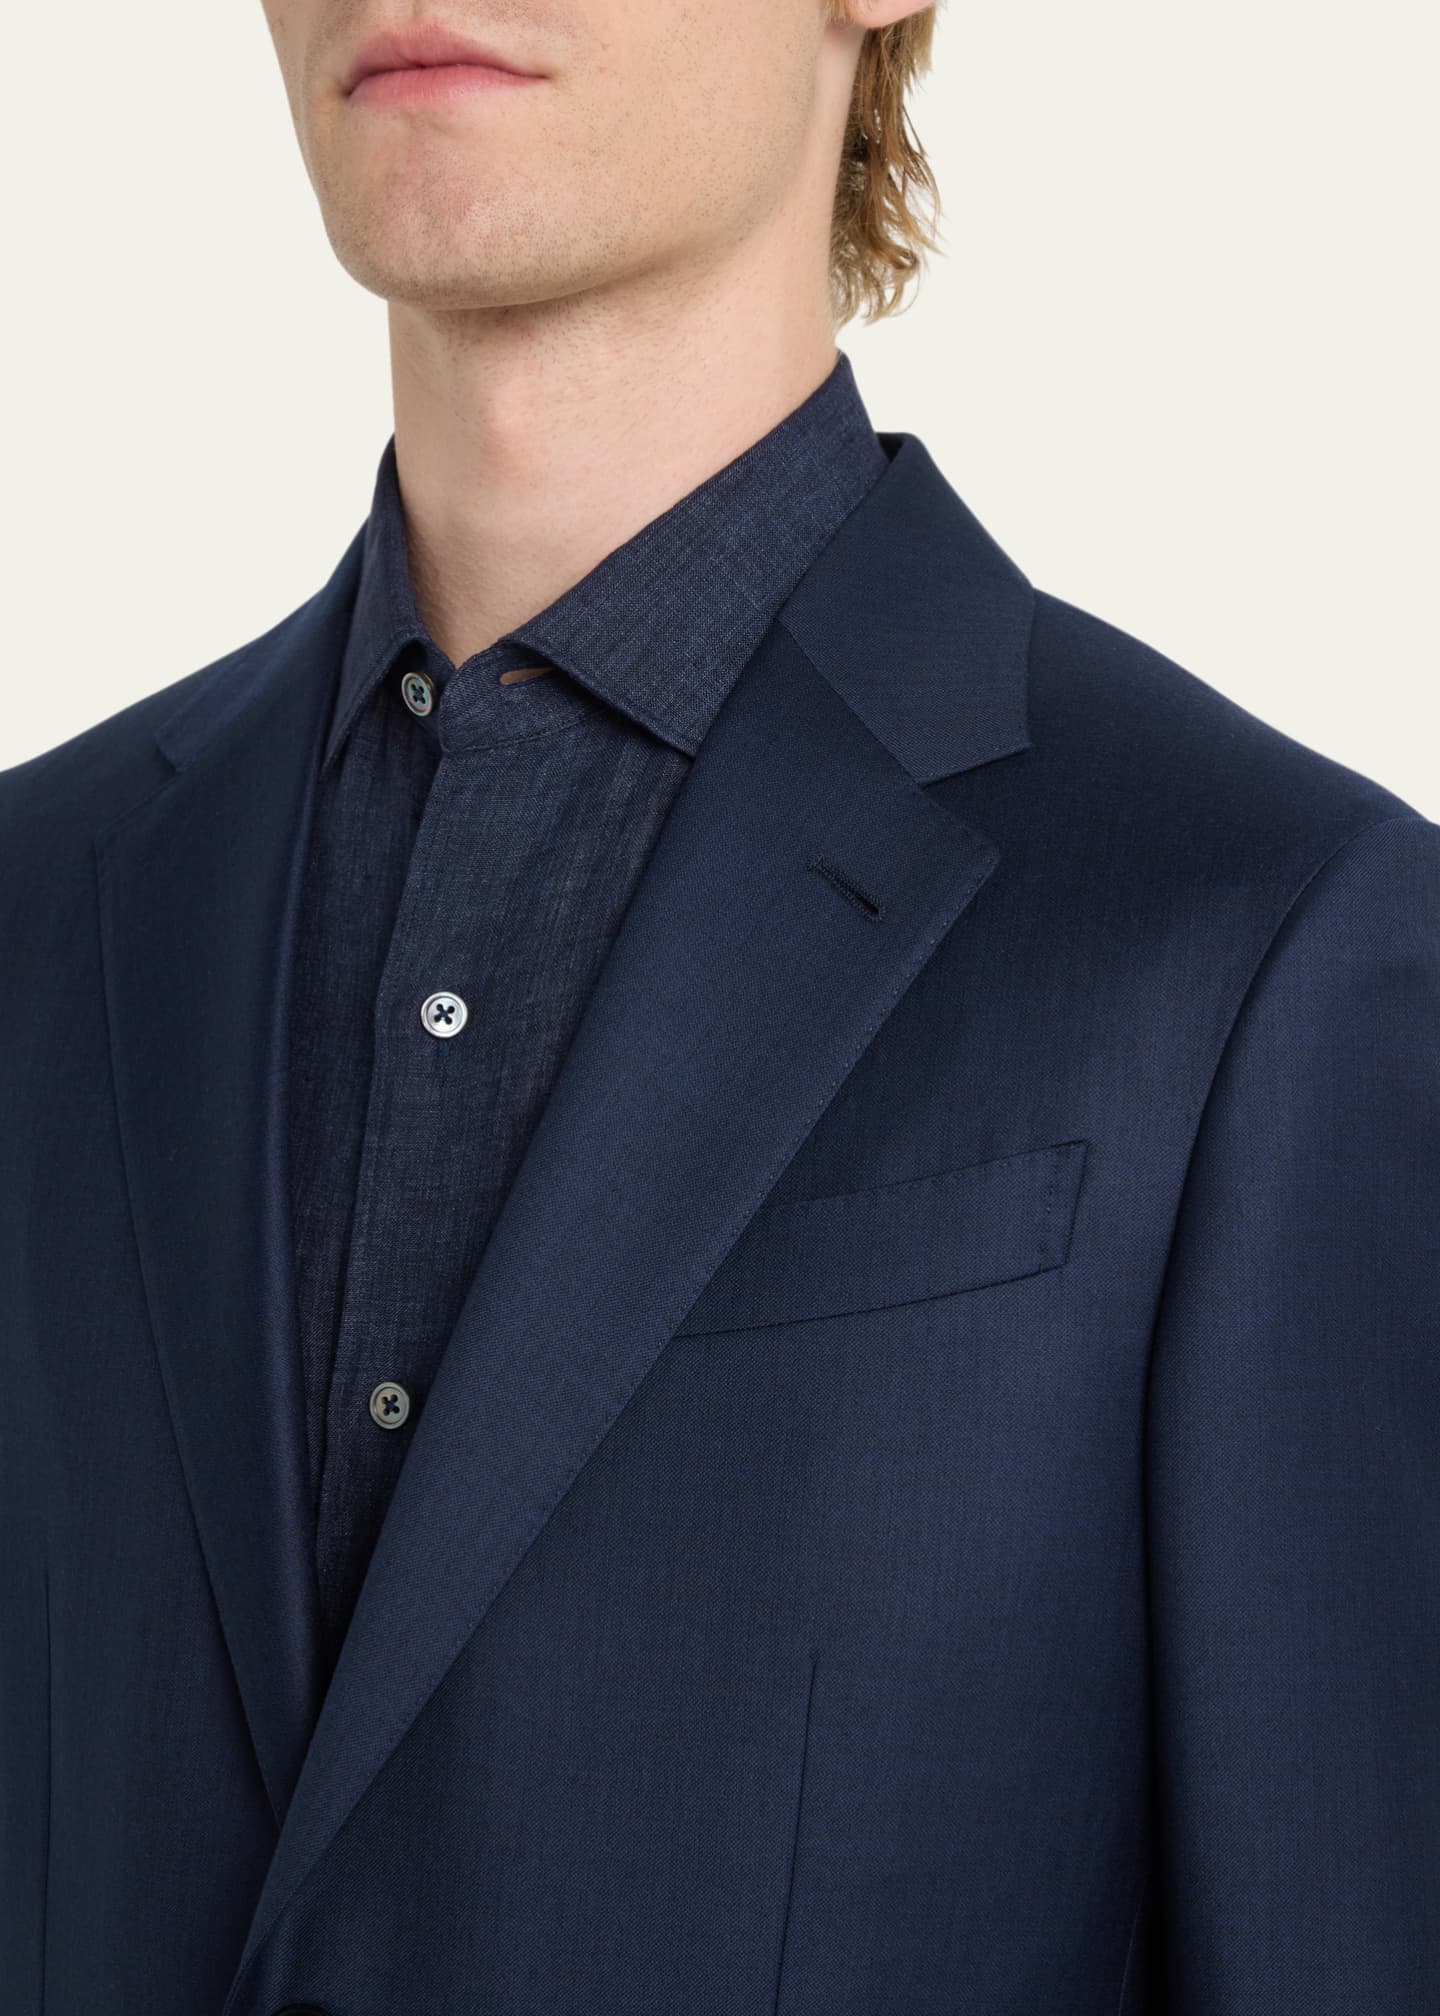 ZEGNA Men's Subtle Herringbone Wool Suit - Bergdorf Goodman